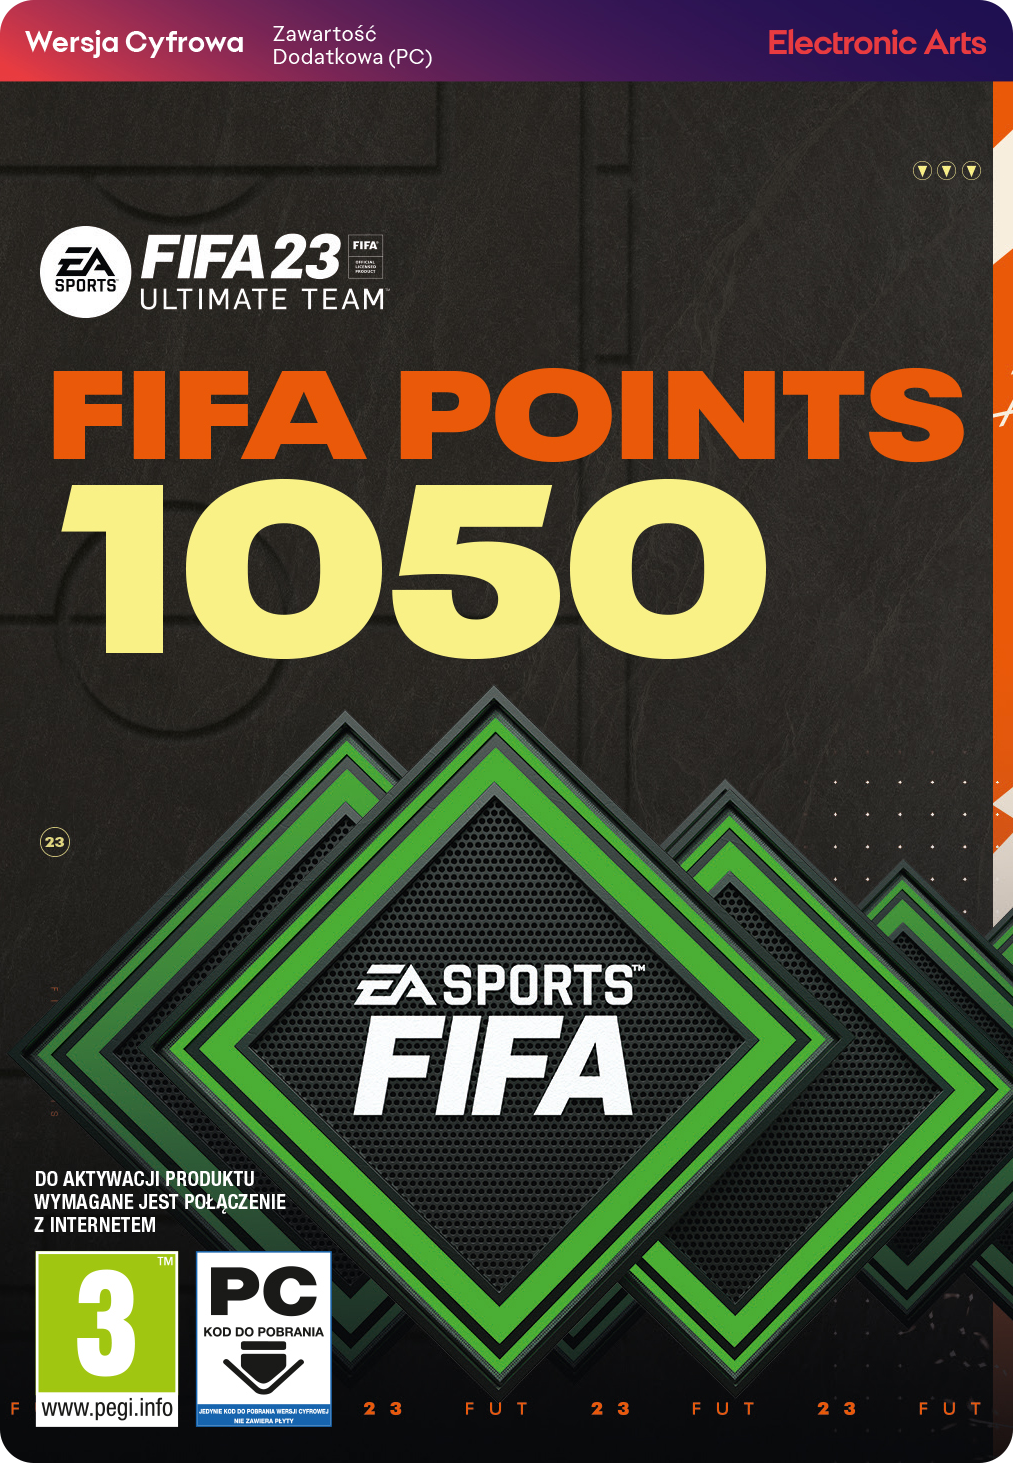 FIFA 23 ULTIMATE TEAM FIFA POINTS 1050